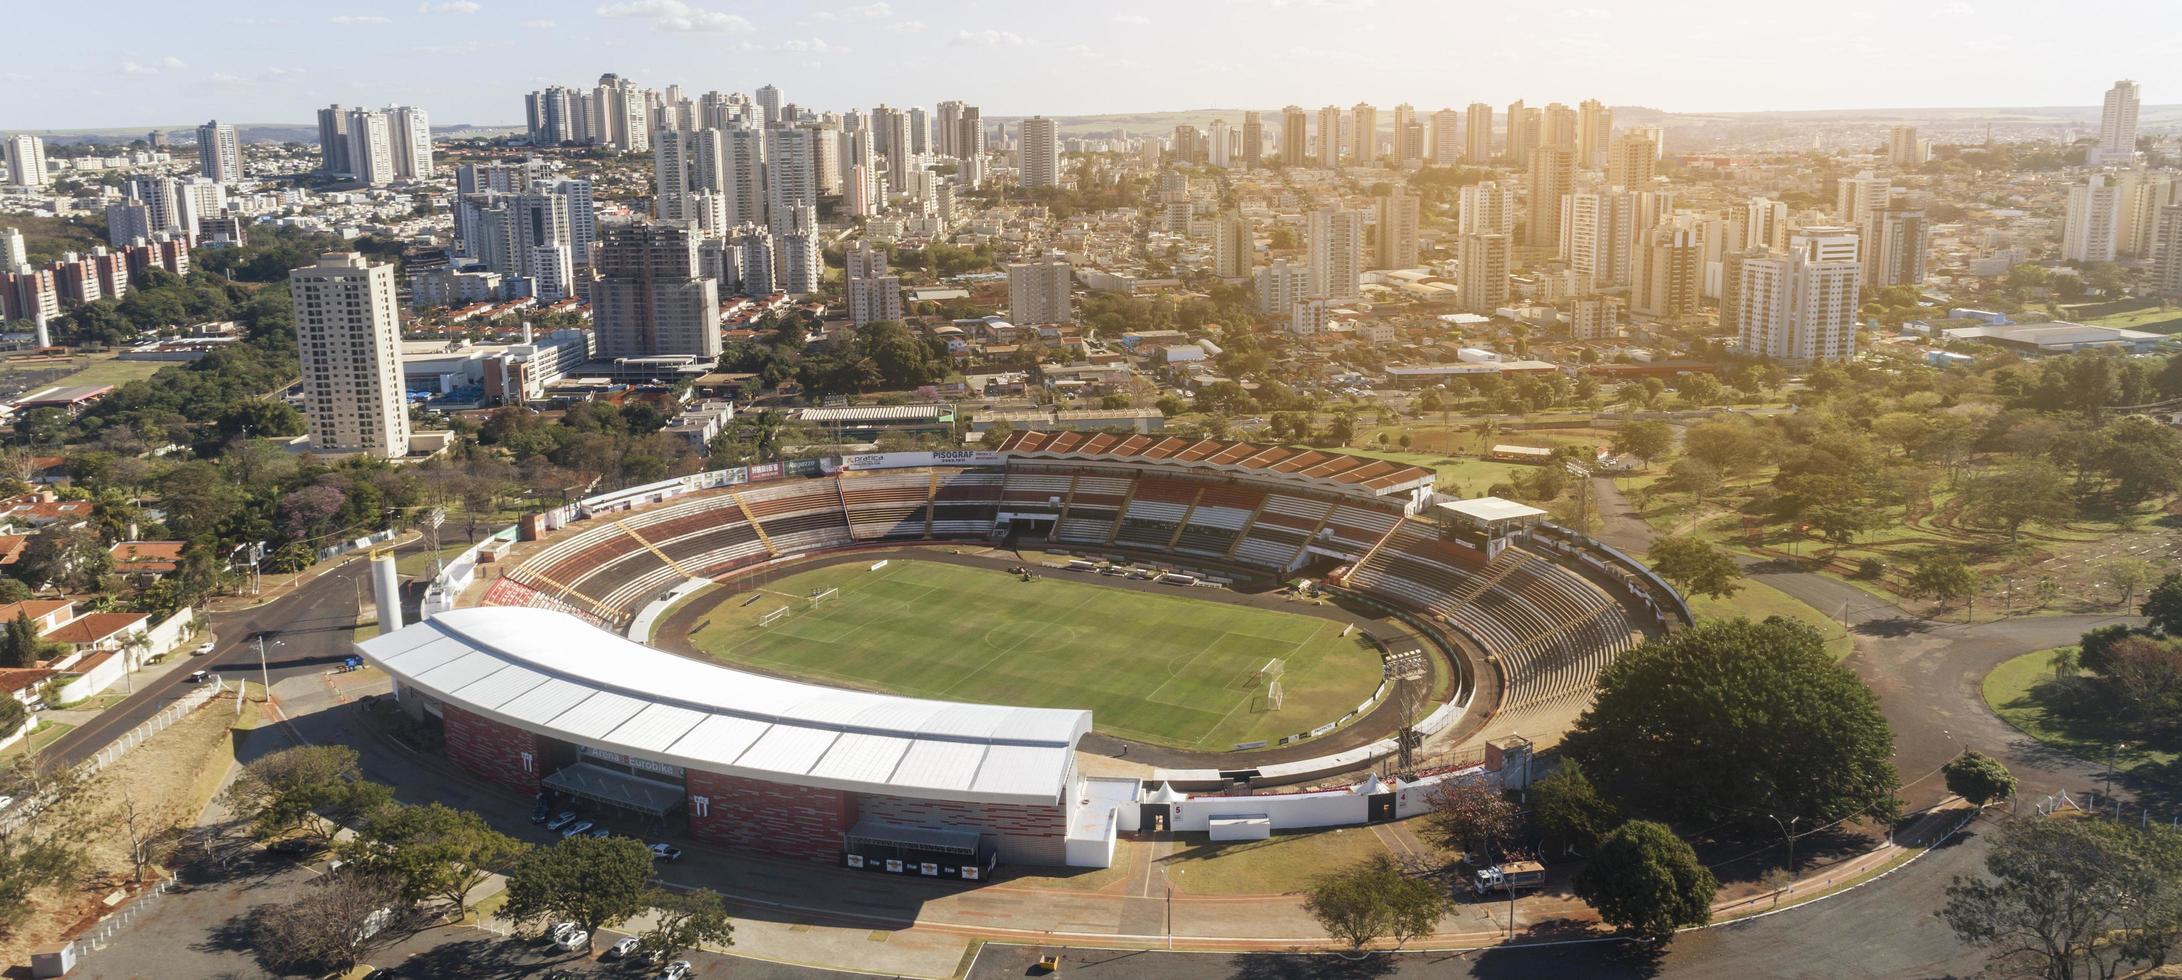 ribeirao preto, sao paulo brasilien ca. juli 2019 luftaufnahme von ribeirao preto, sao paulo, sie können gebäude und das stadion santa cruz botafogo sehen. foto